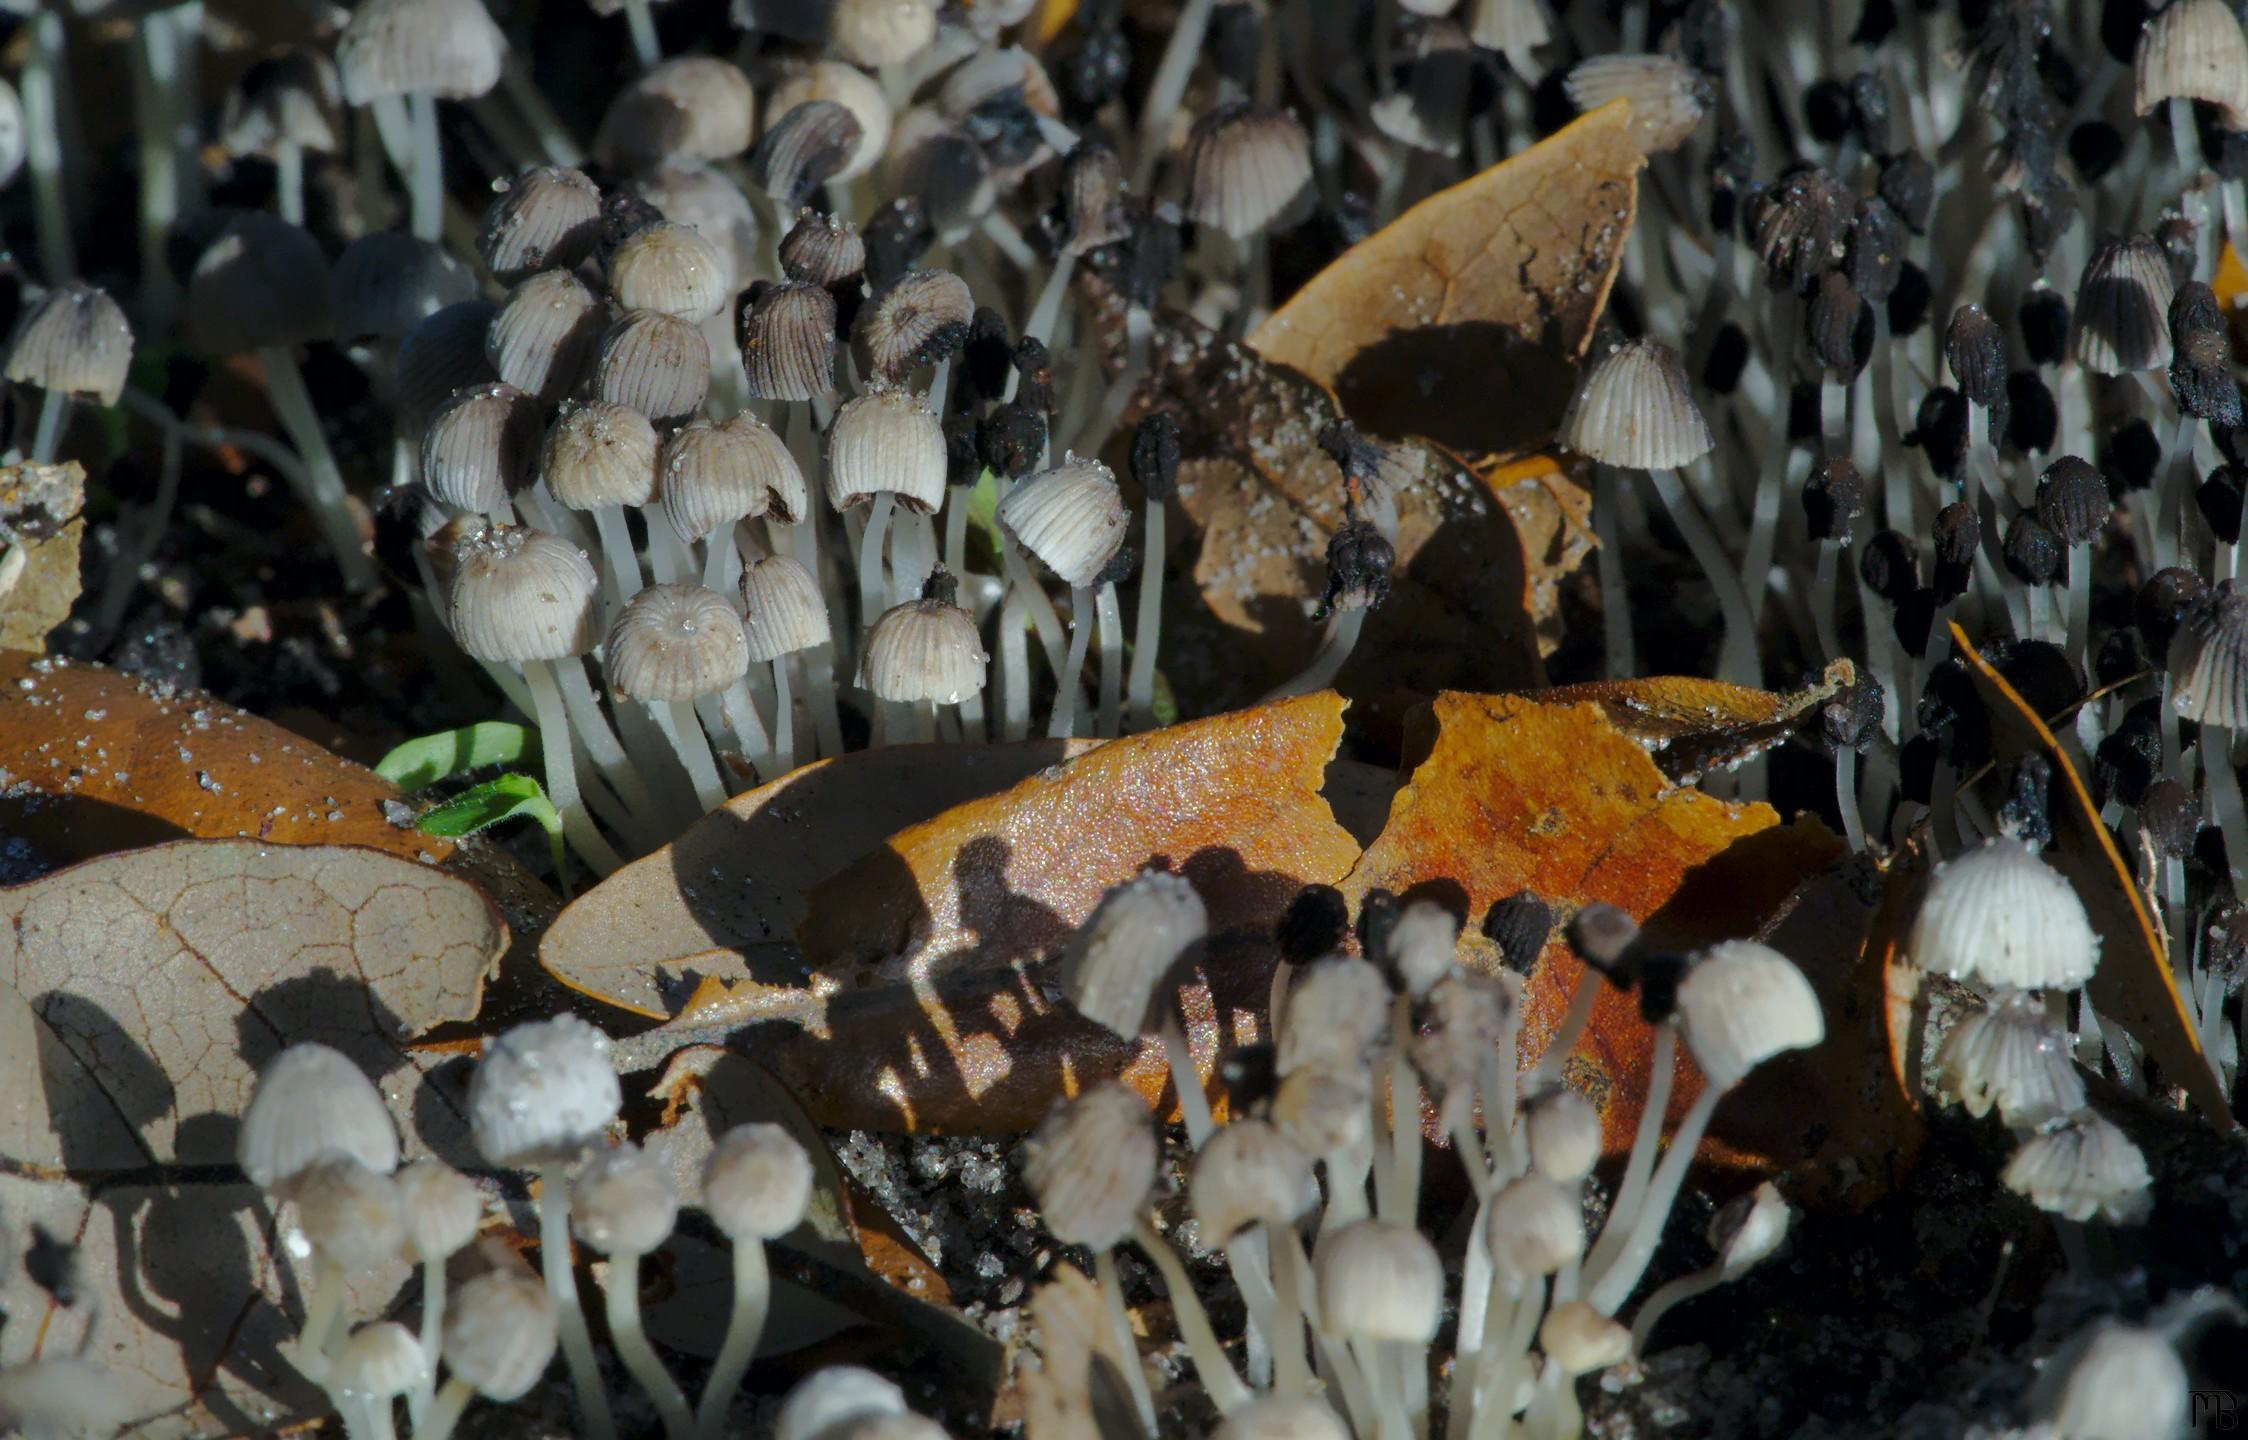 Field of mushroom wih orange dead leaf